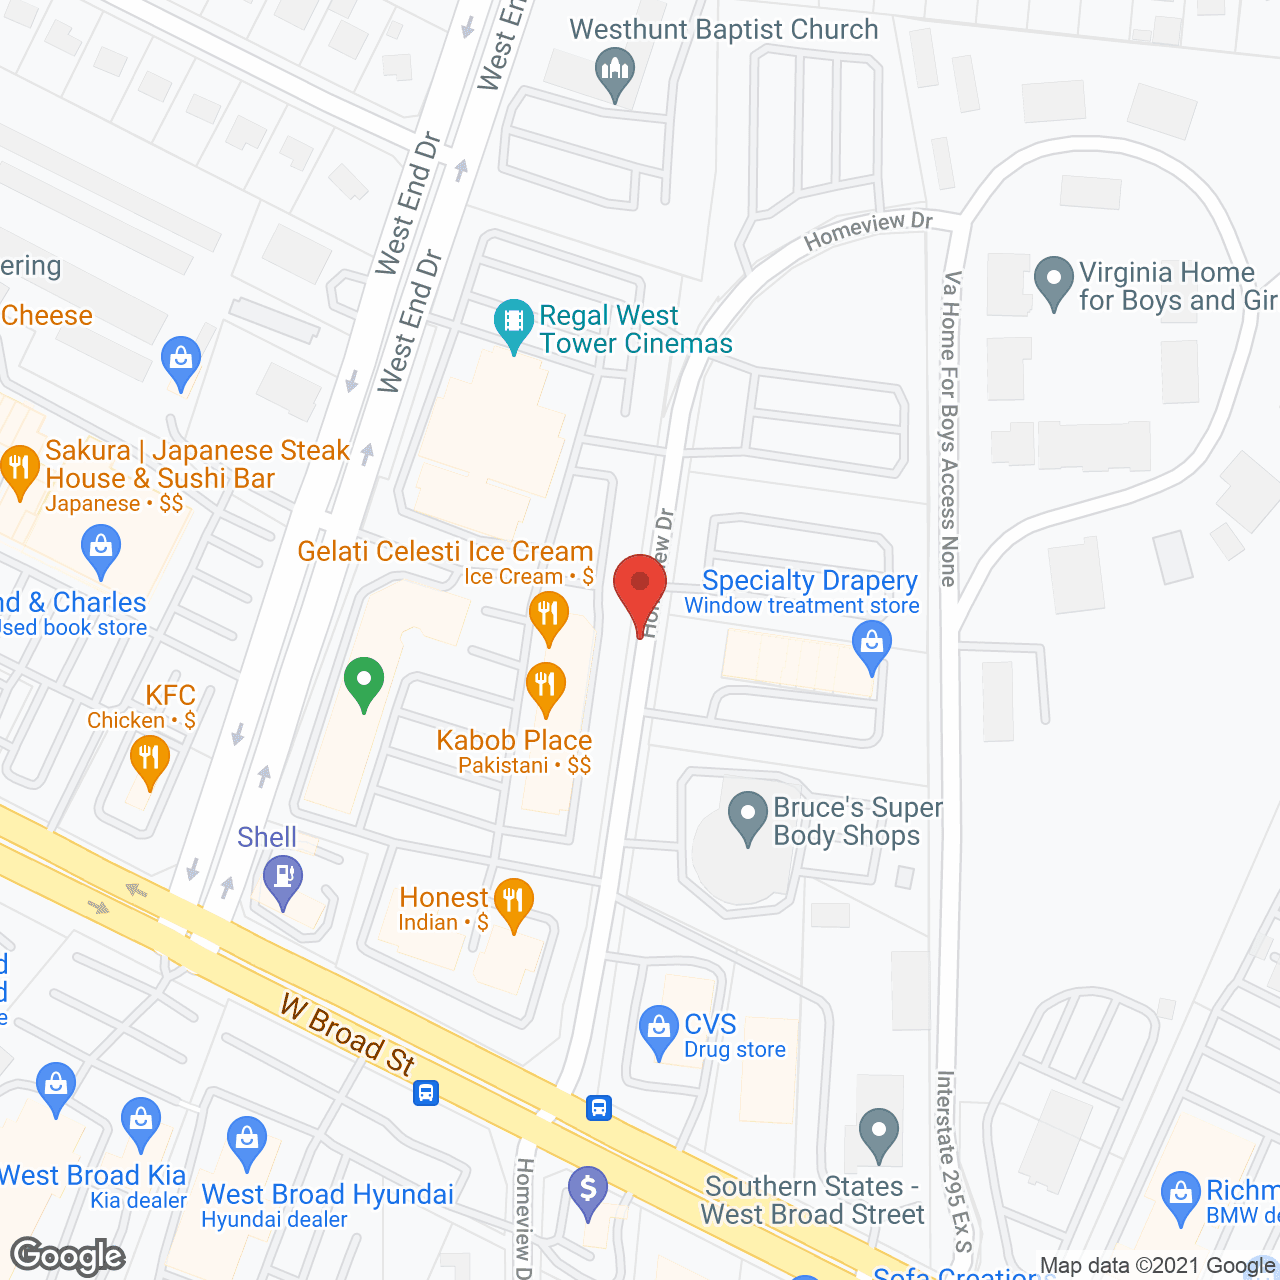 Home Instead - Richmond, VA in google map